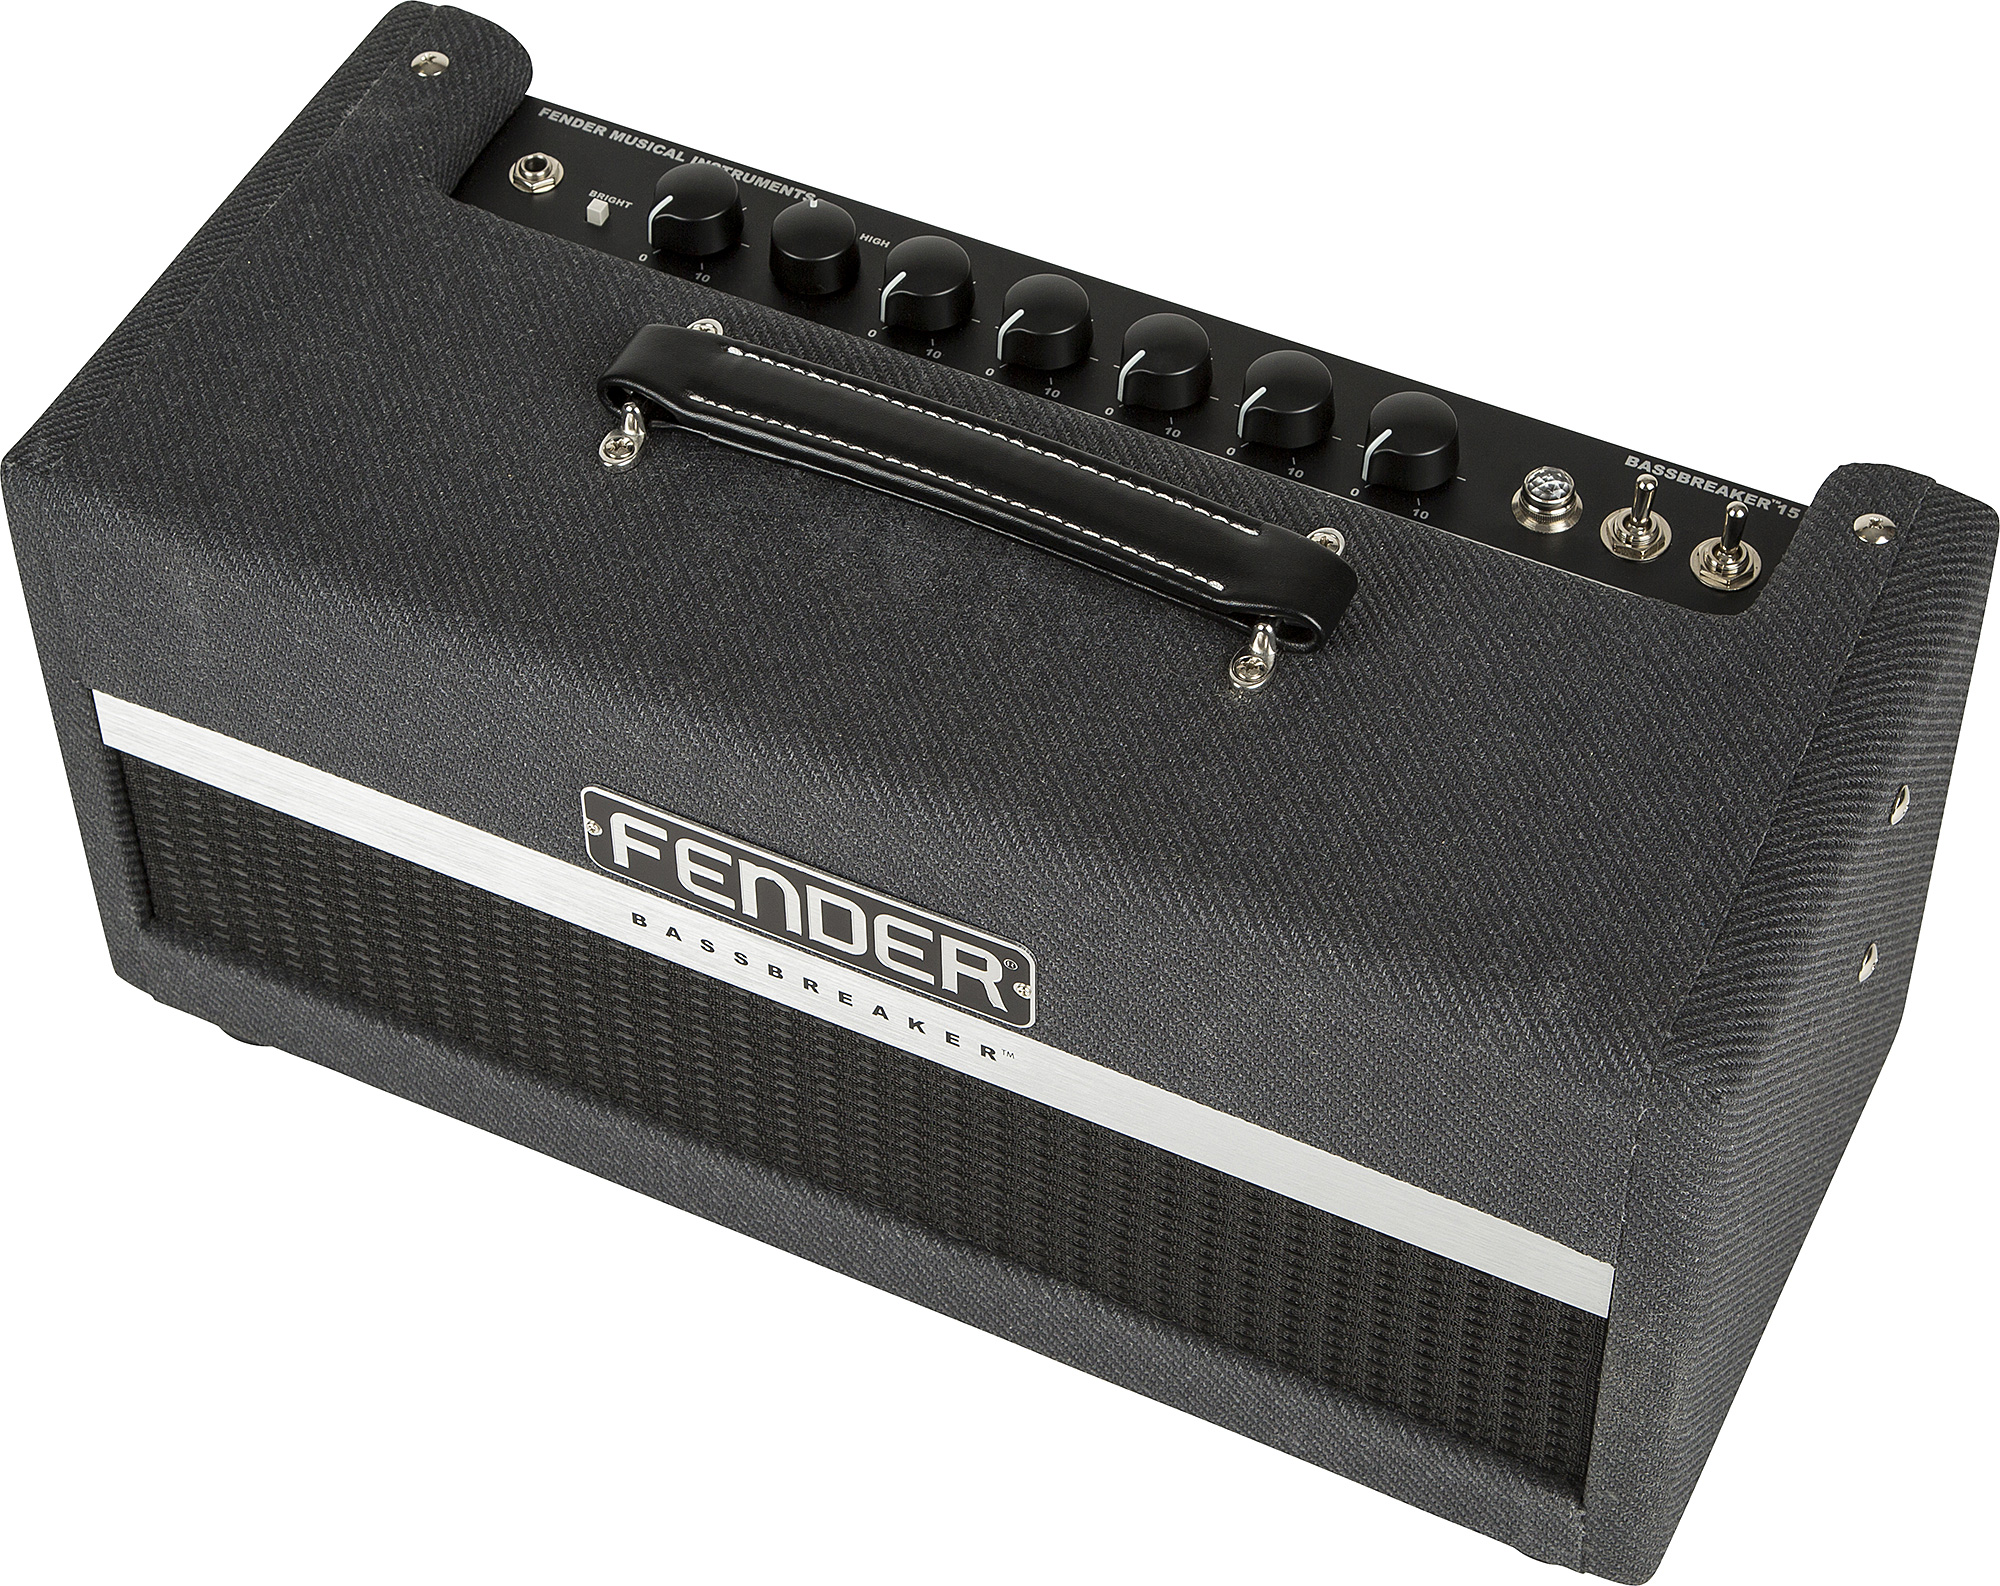 Fender Bassbreaker 15 Head 15w Gray Tweed - Electric guitar amp head - Variation 1